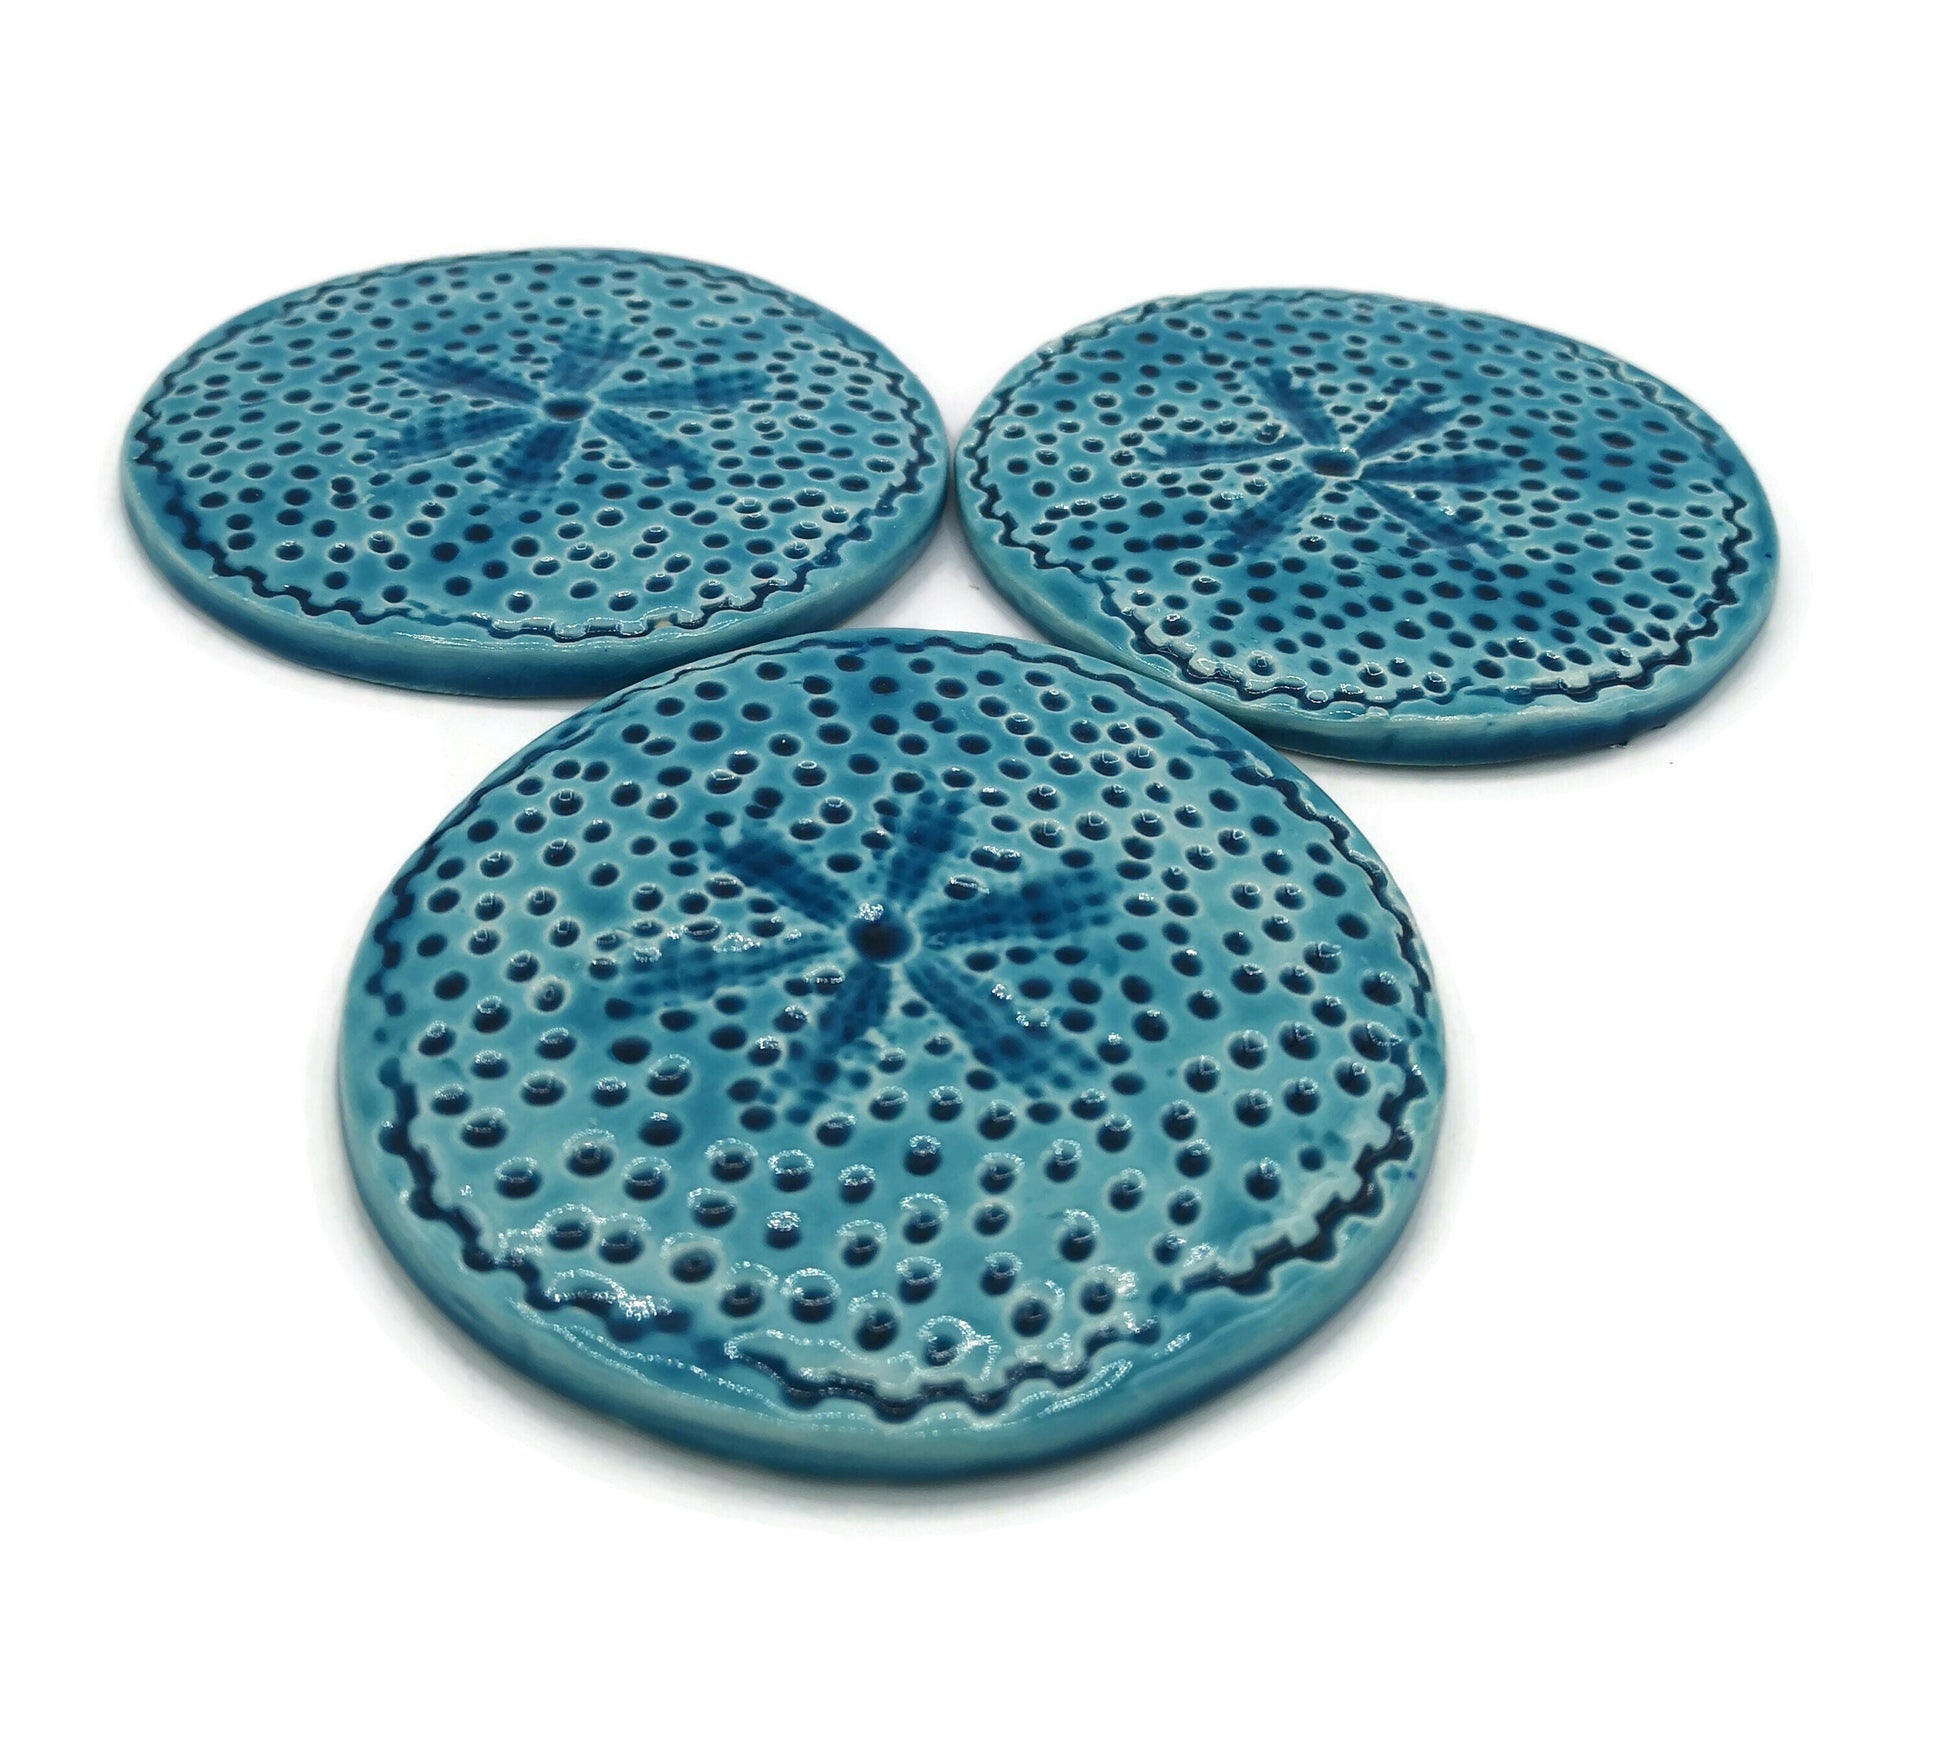 AESTHETIC CERAMIC COASTERS, Modern Round Office Coasters Handmade, Housewarming Gift First Home Clay Coasters - Ceramica Ana Rafael